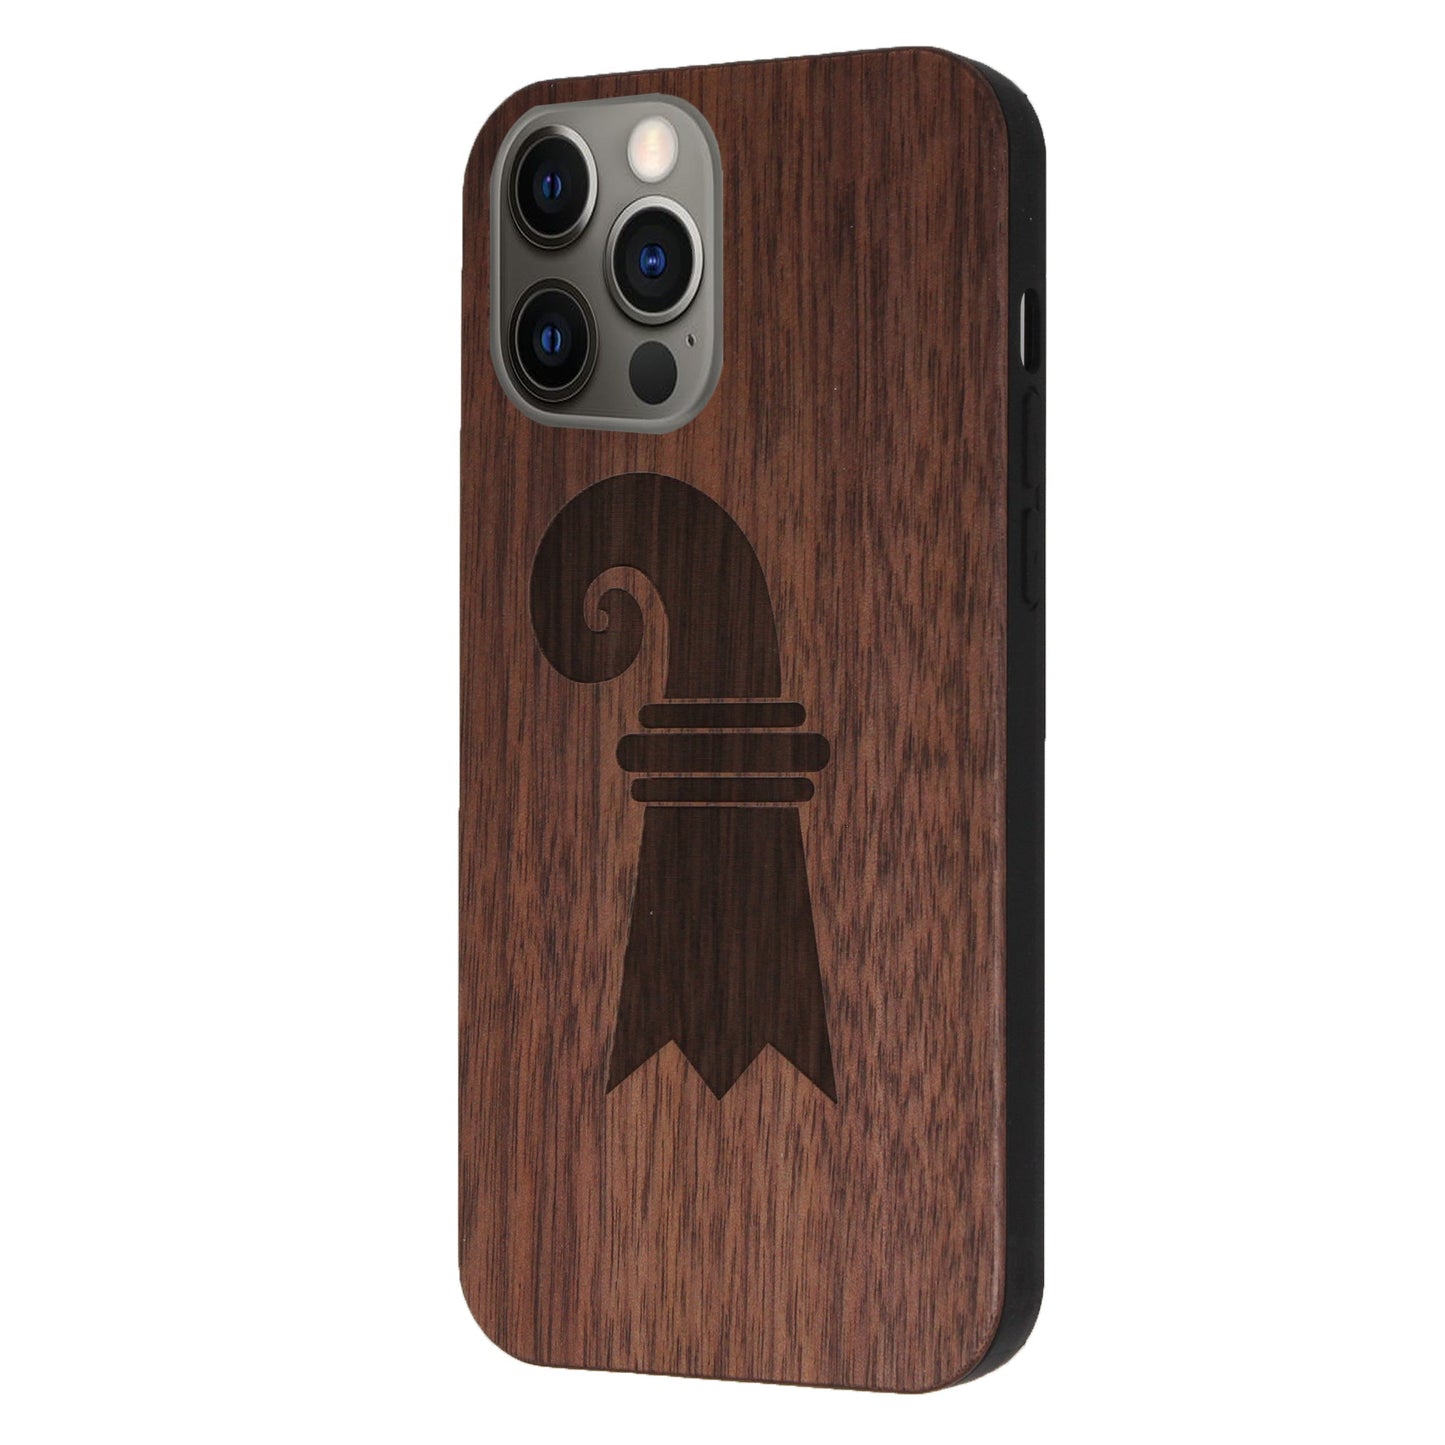 Baslerstab Eden case made of walnut wood for iPhone 12 Pro Max 